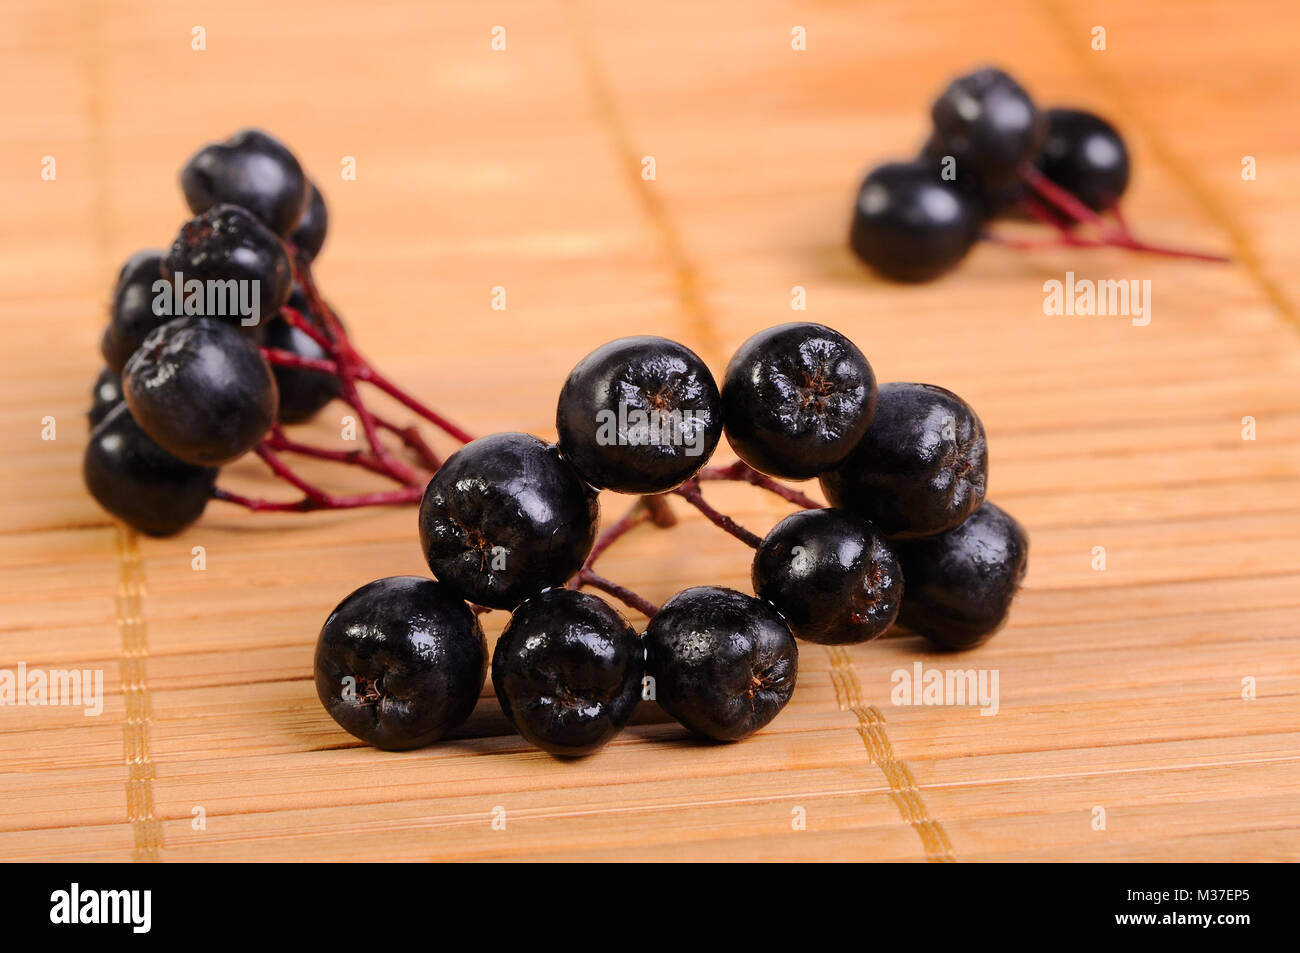 Fruits chokeberry on a mat Stock Photo